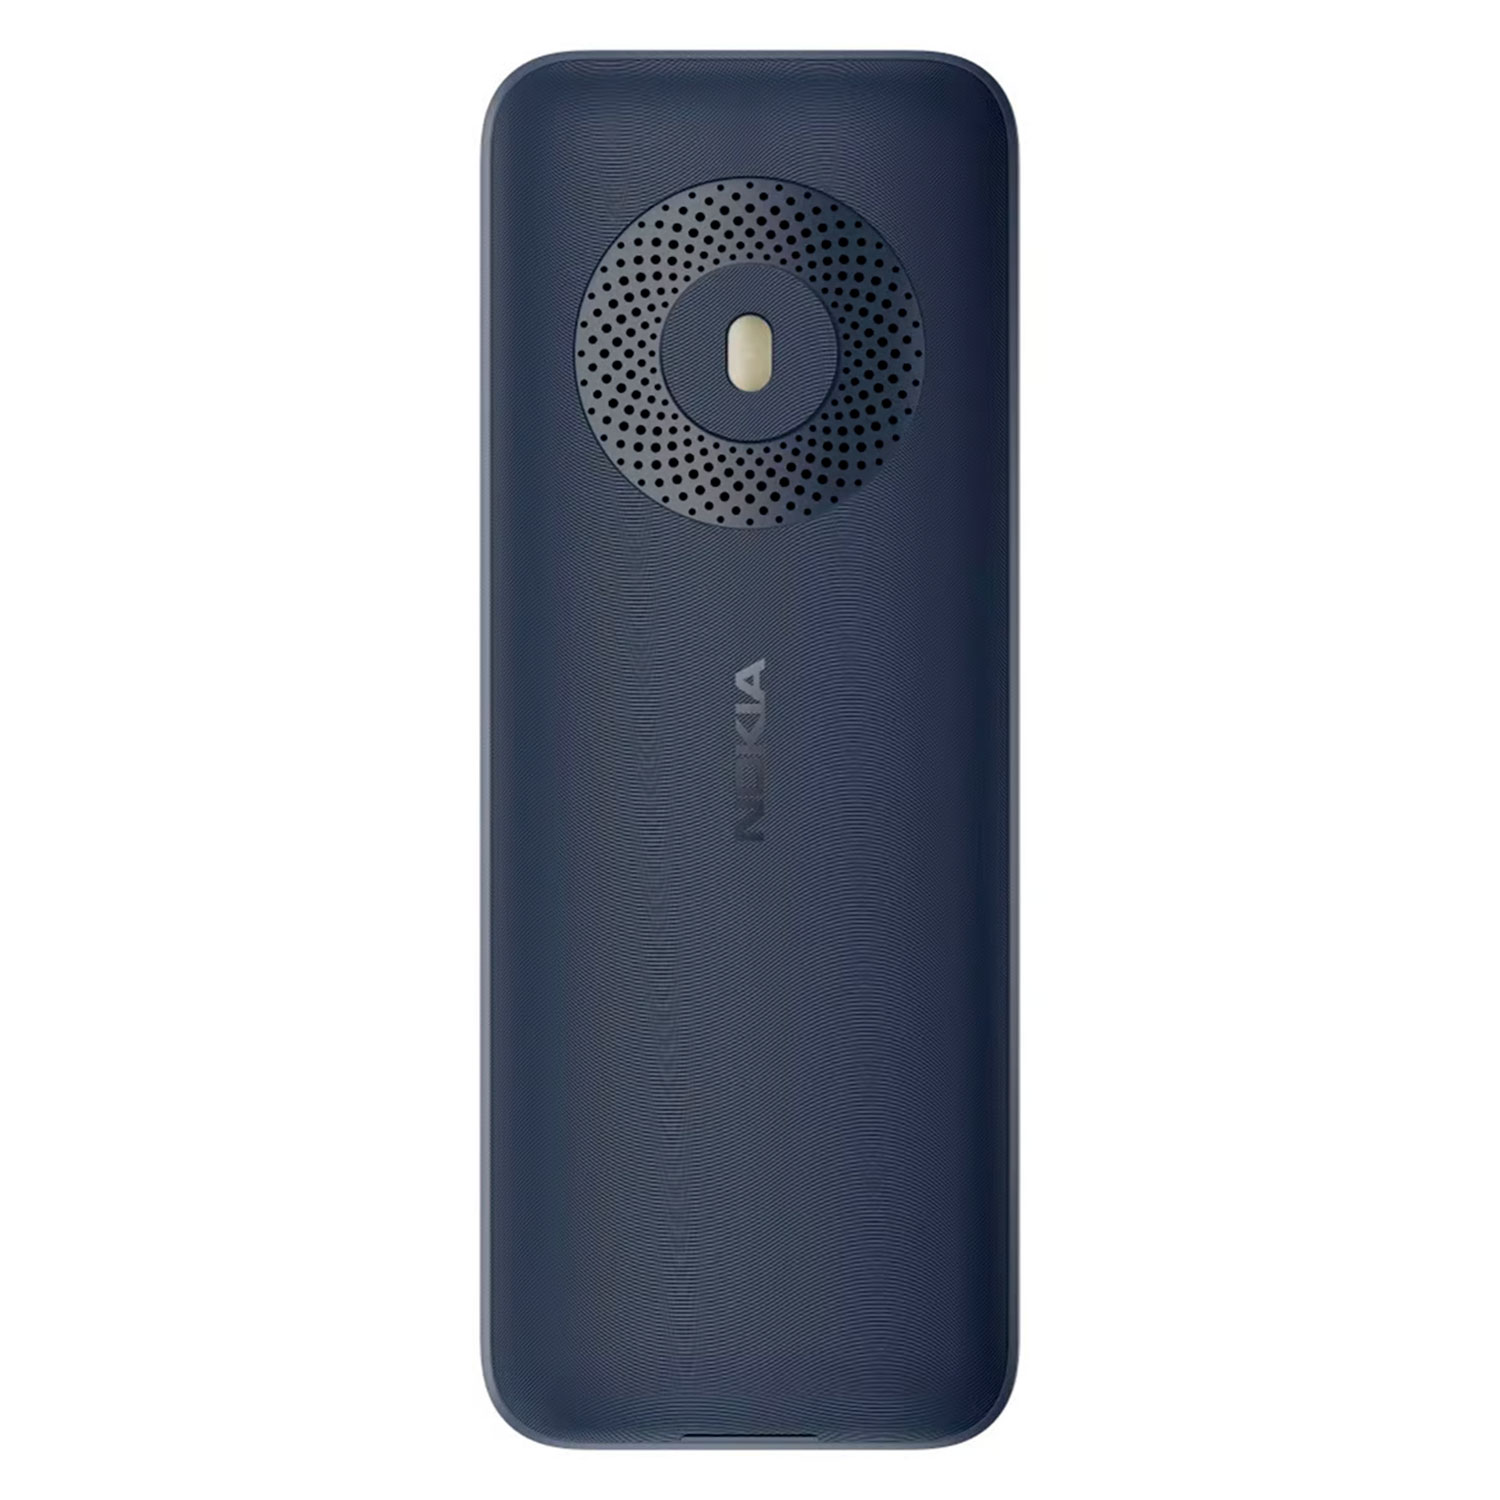 Celular Nokia N-130 TA-1576 Dual SIM Tela 1.8" - Preto